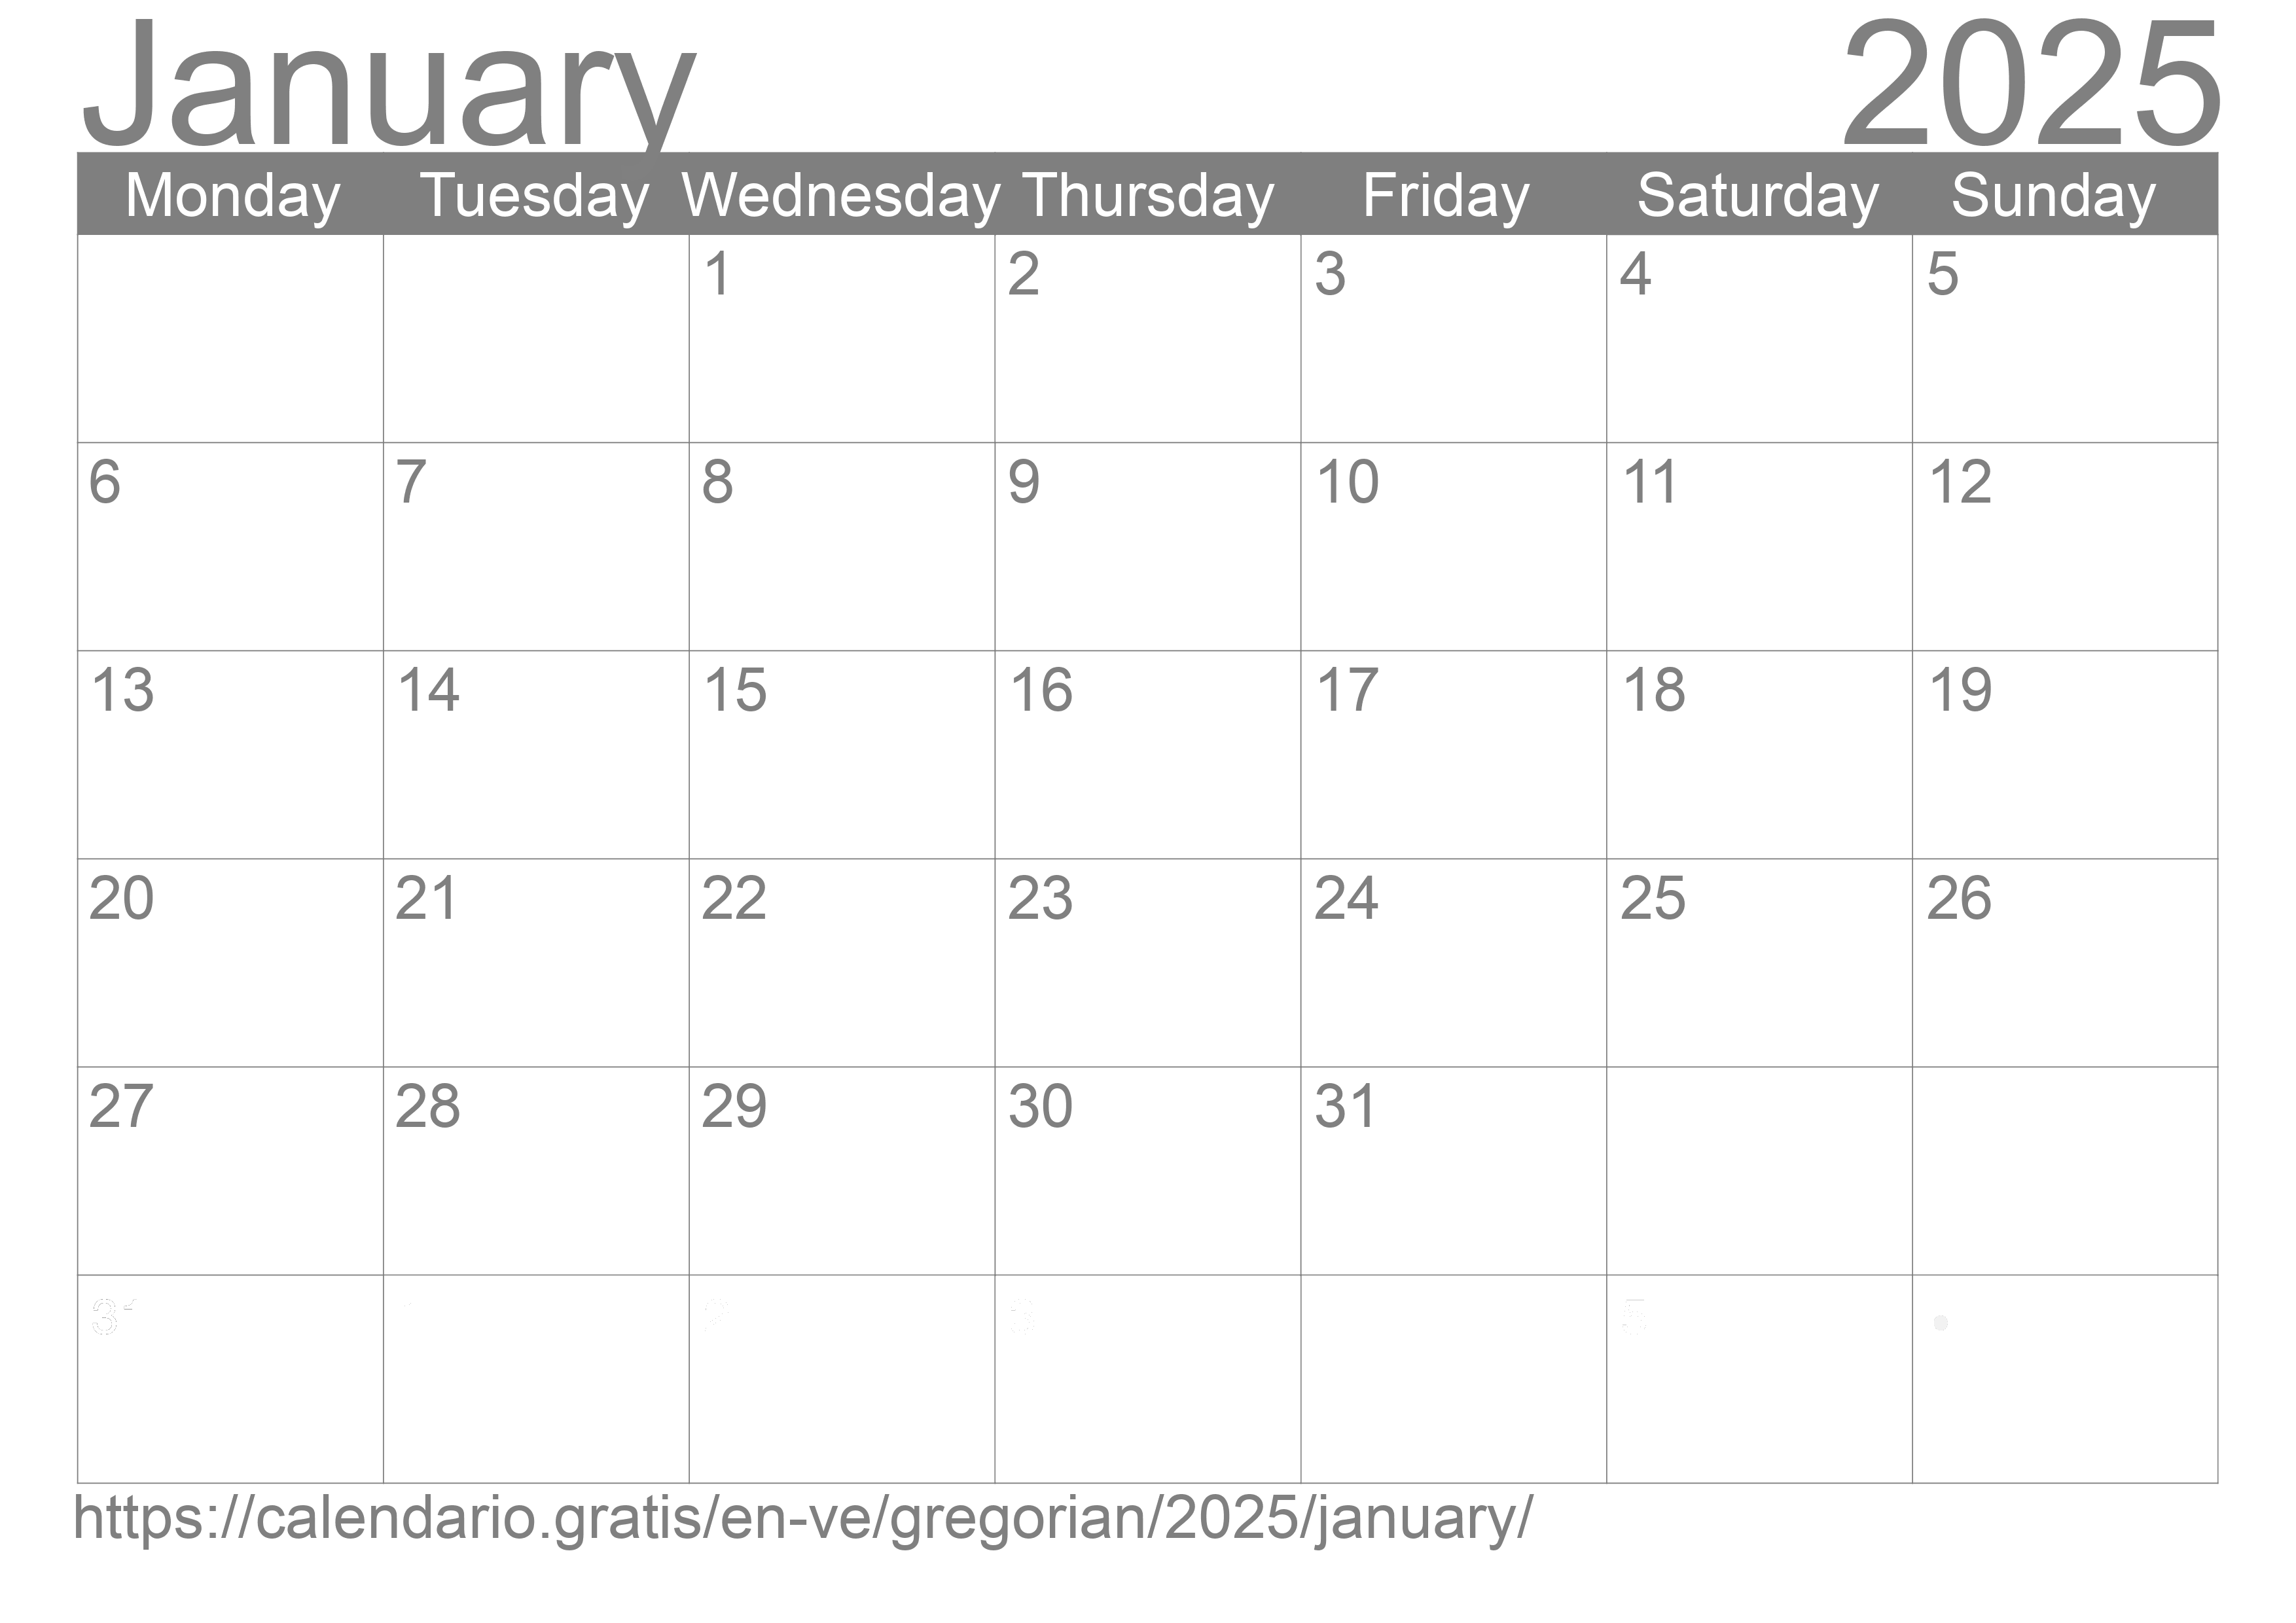 Calendar January 2025 to print